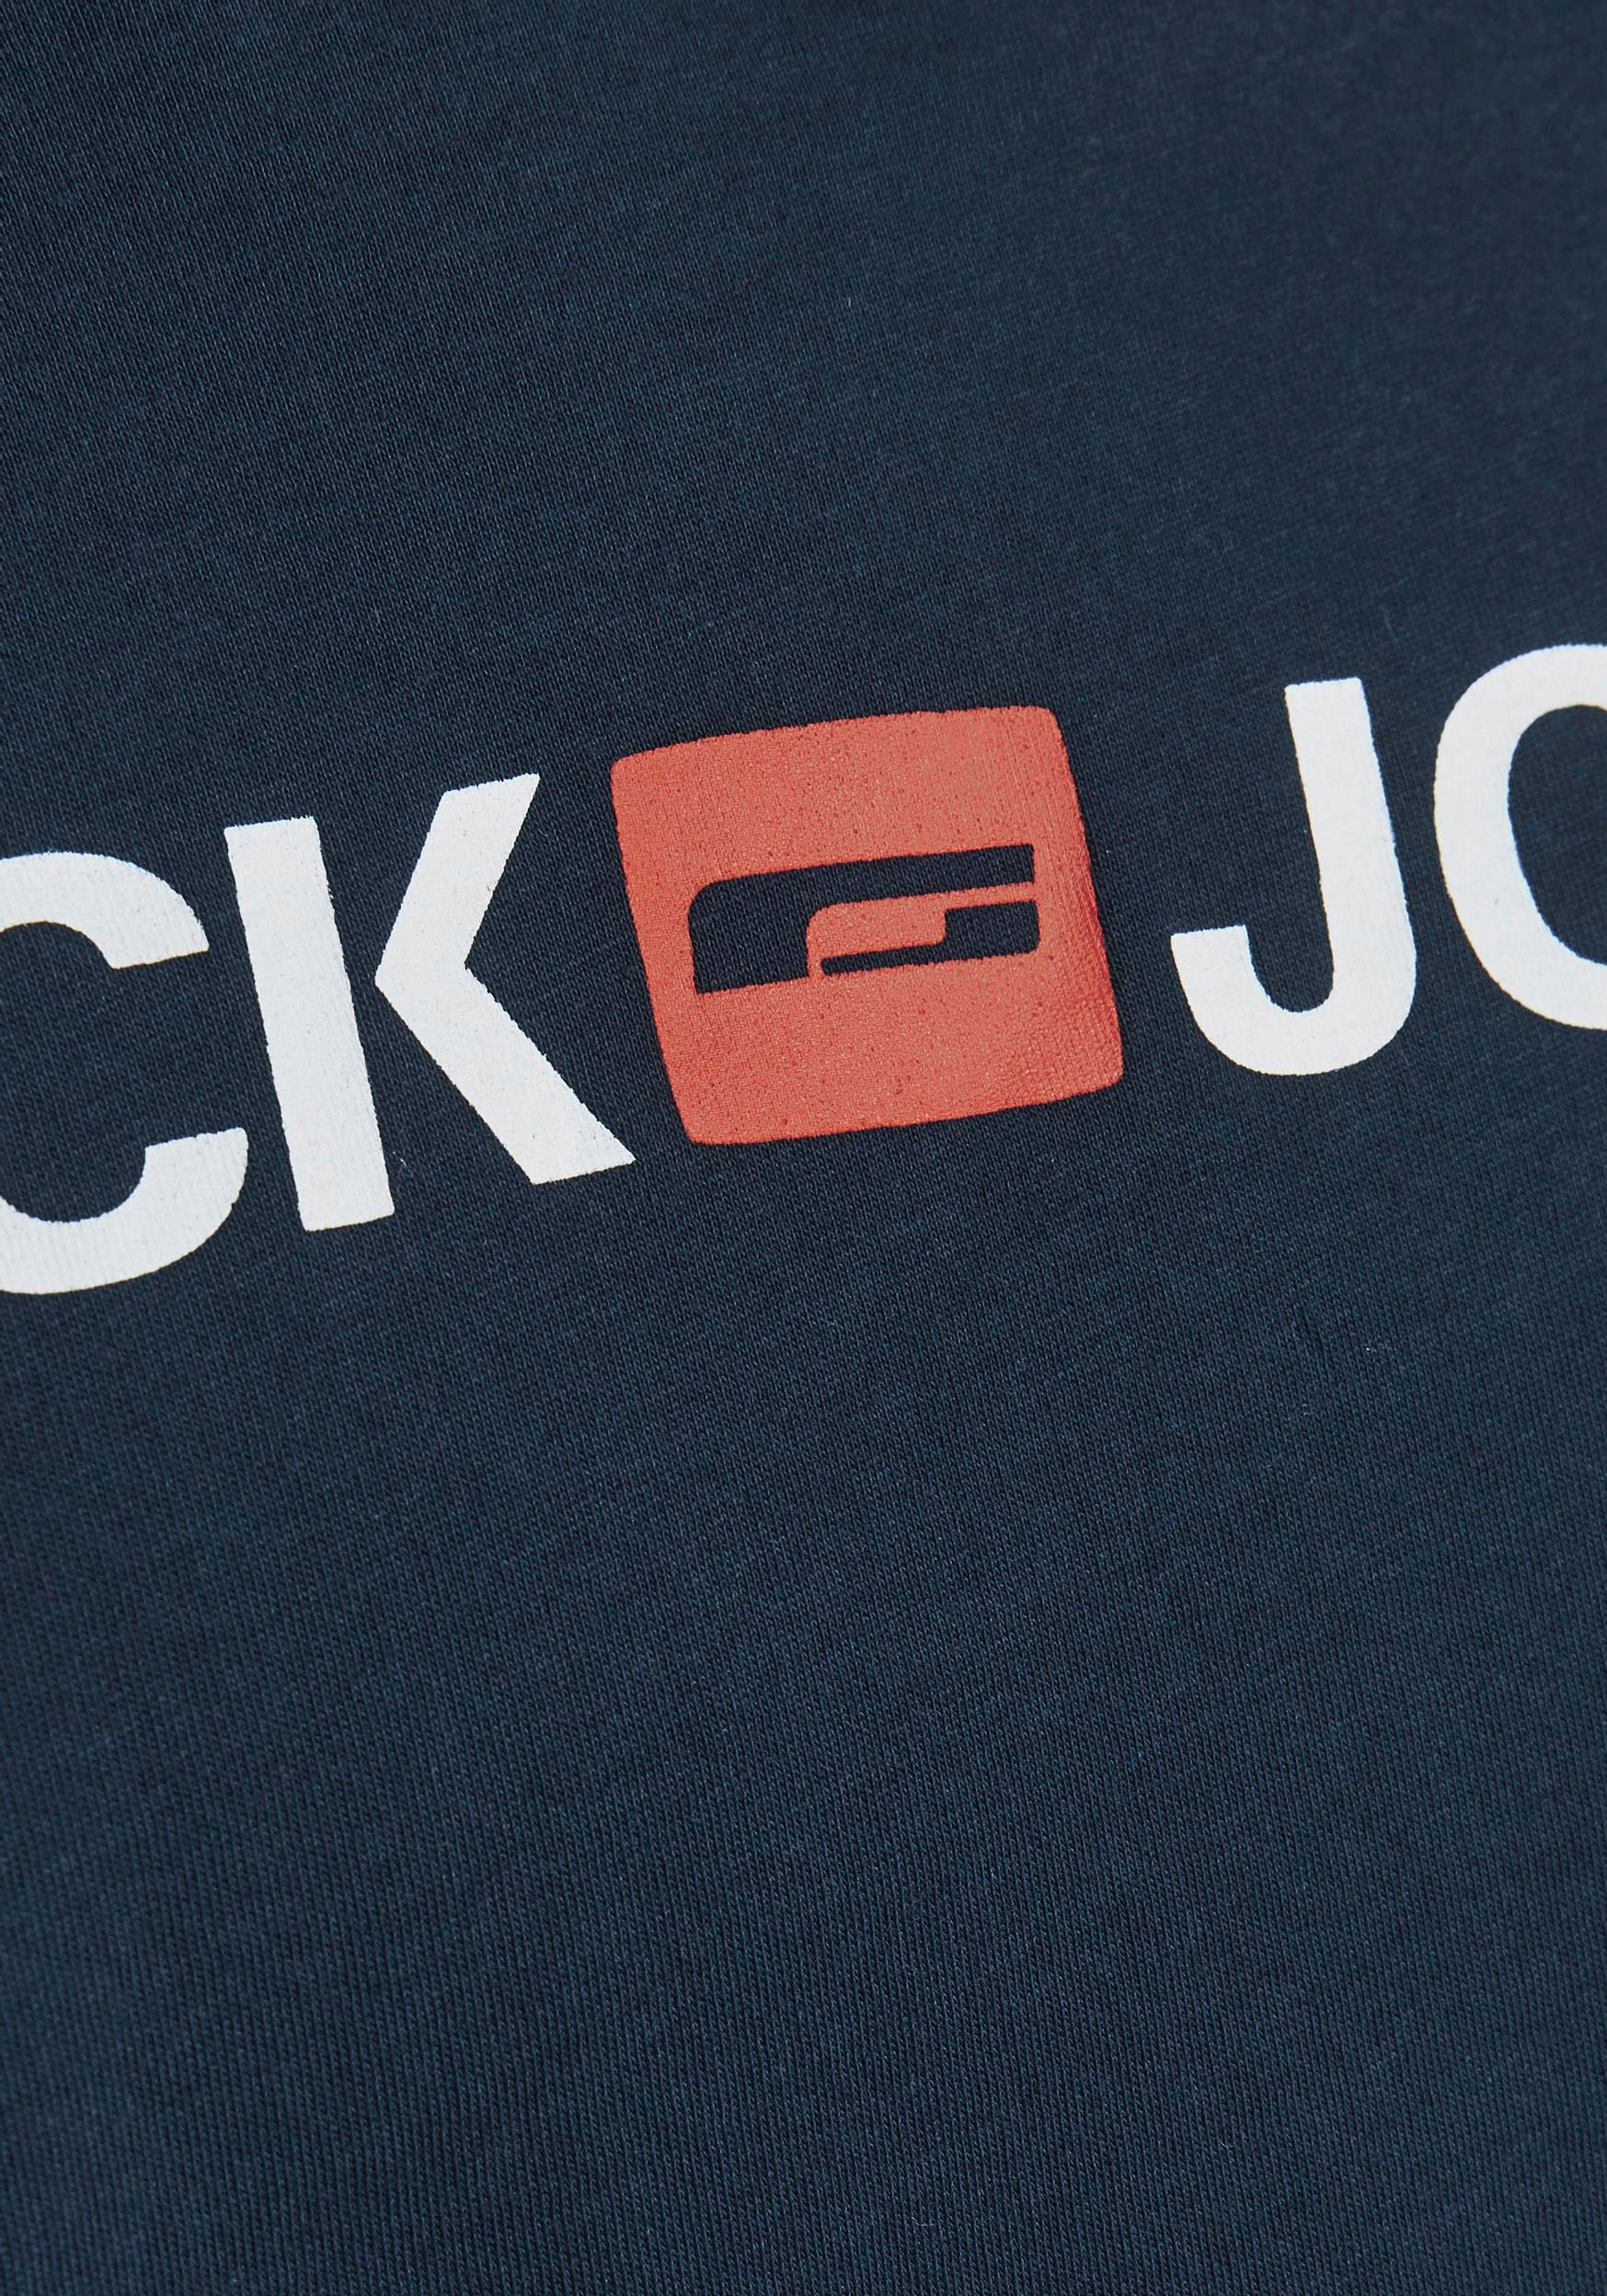 Jack & Jones T-Shirt »CORP LOGO TEE«